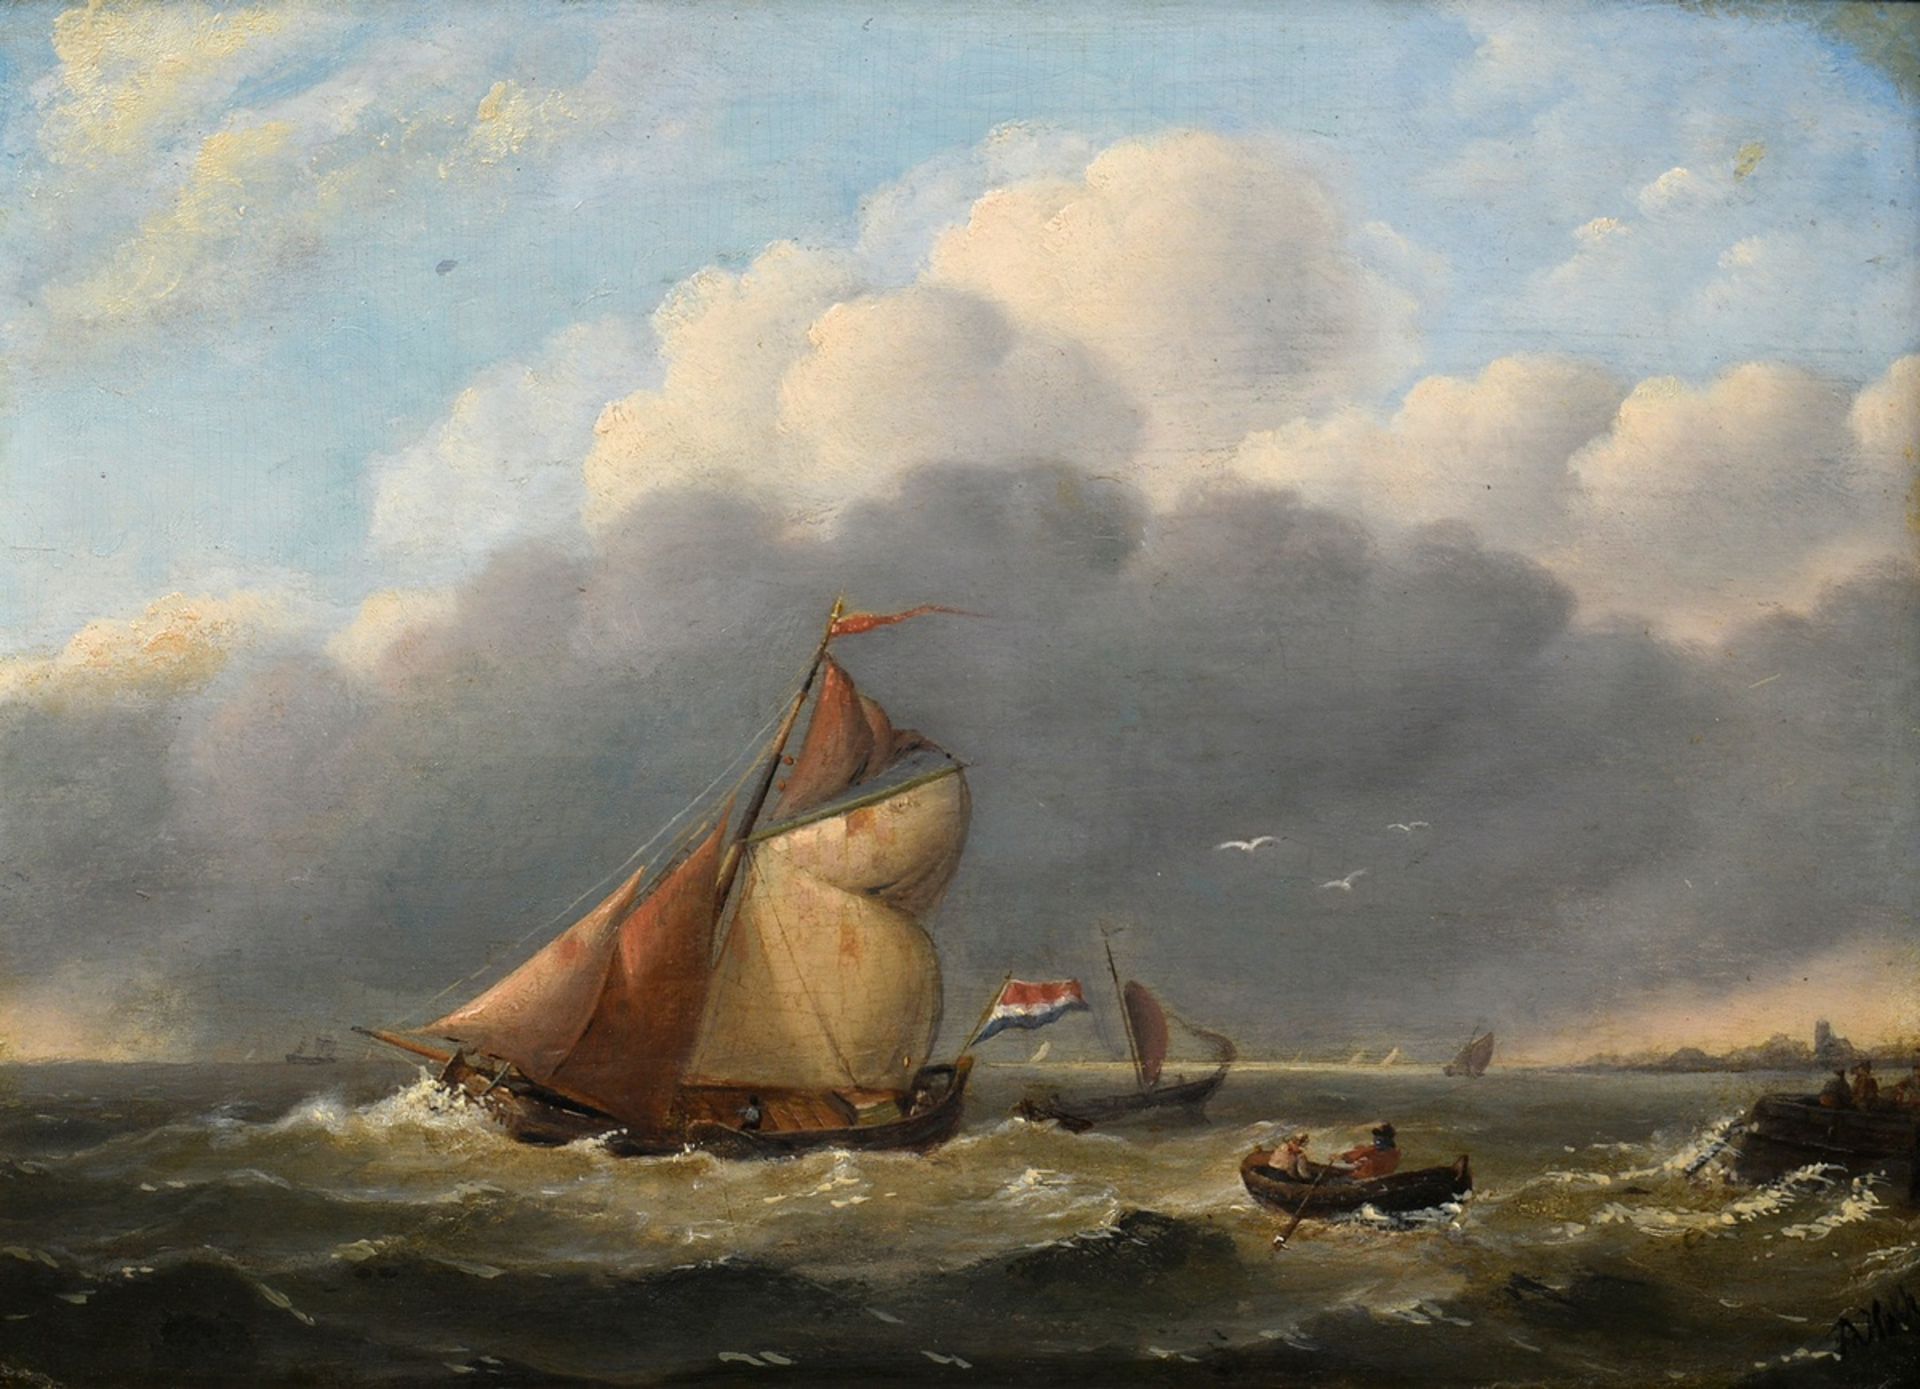 Hulk, Abraham I (1813-1897) "Dutch sailor off the coast", oil/wood, bottom right signed, magnificen